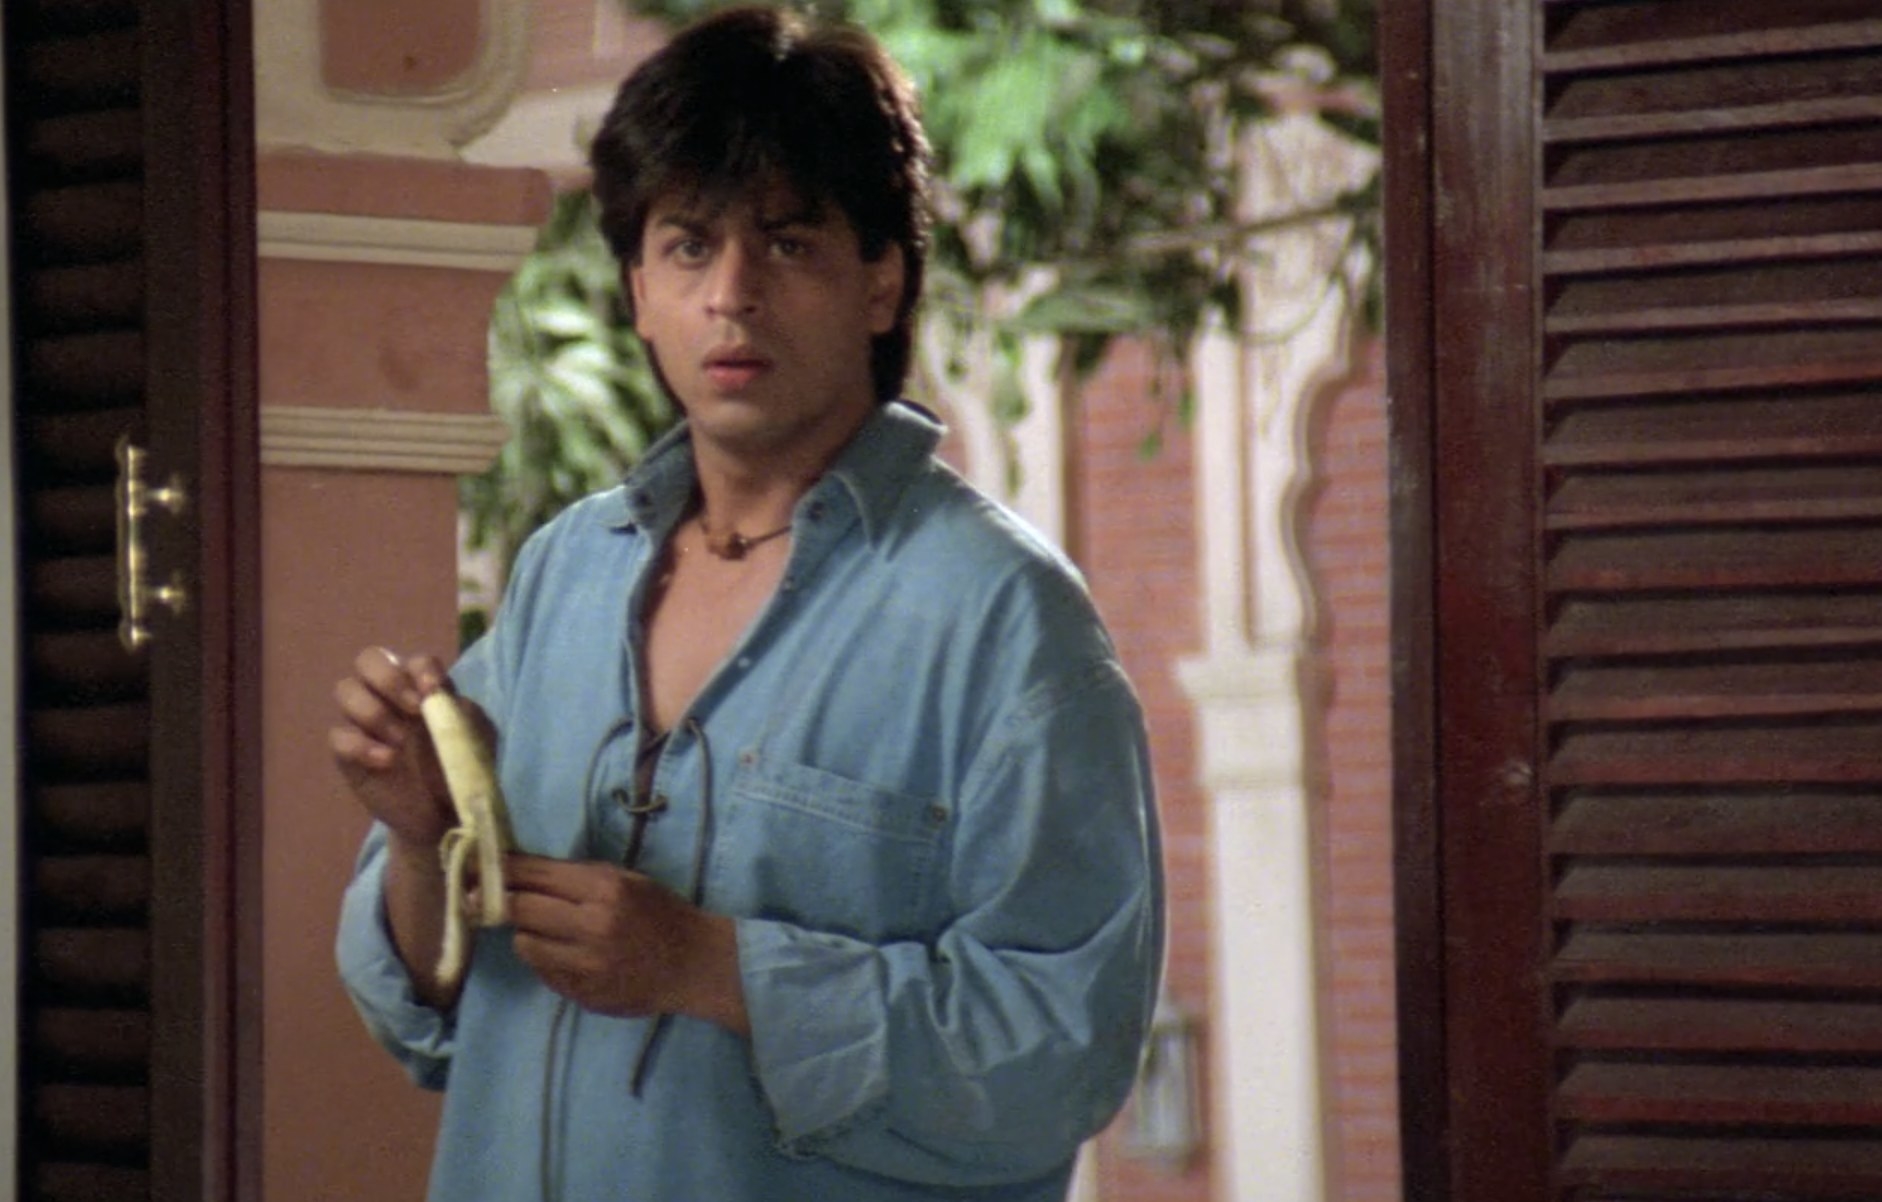 Actor Shah Rukh Khan pauses before a door while peeling a banana.